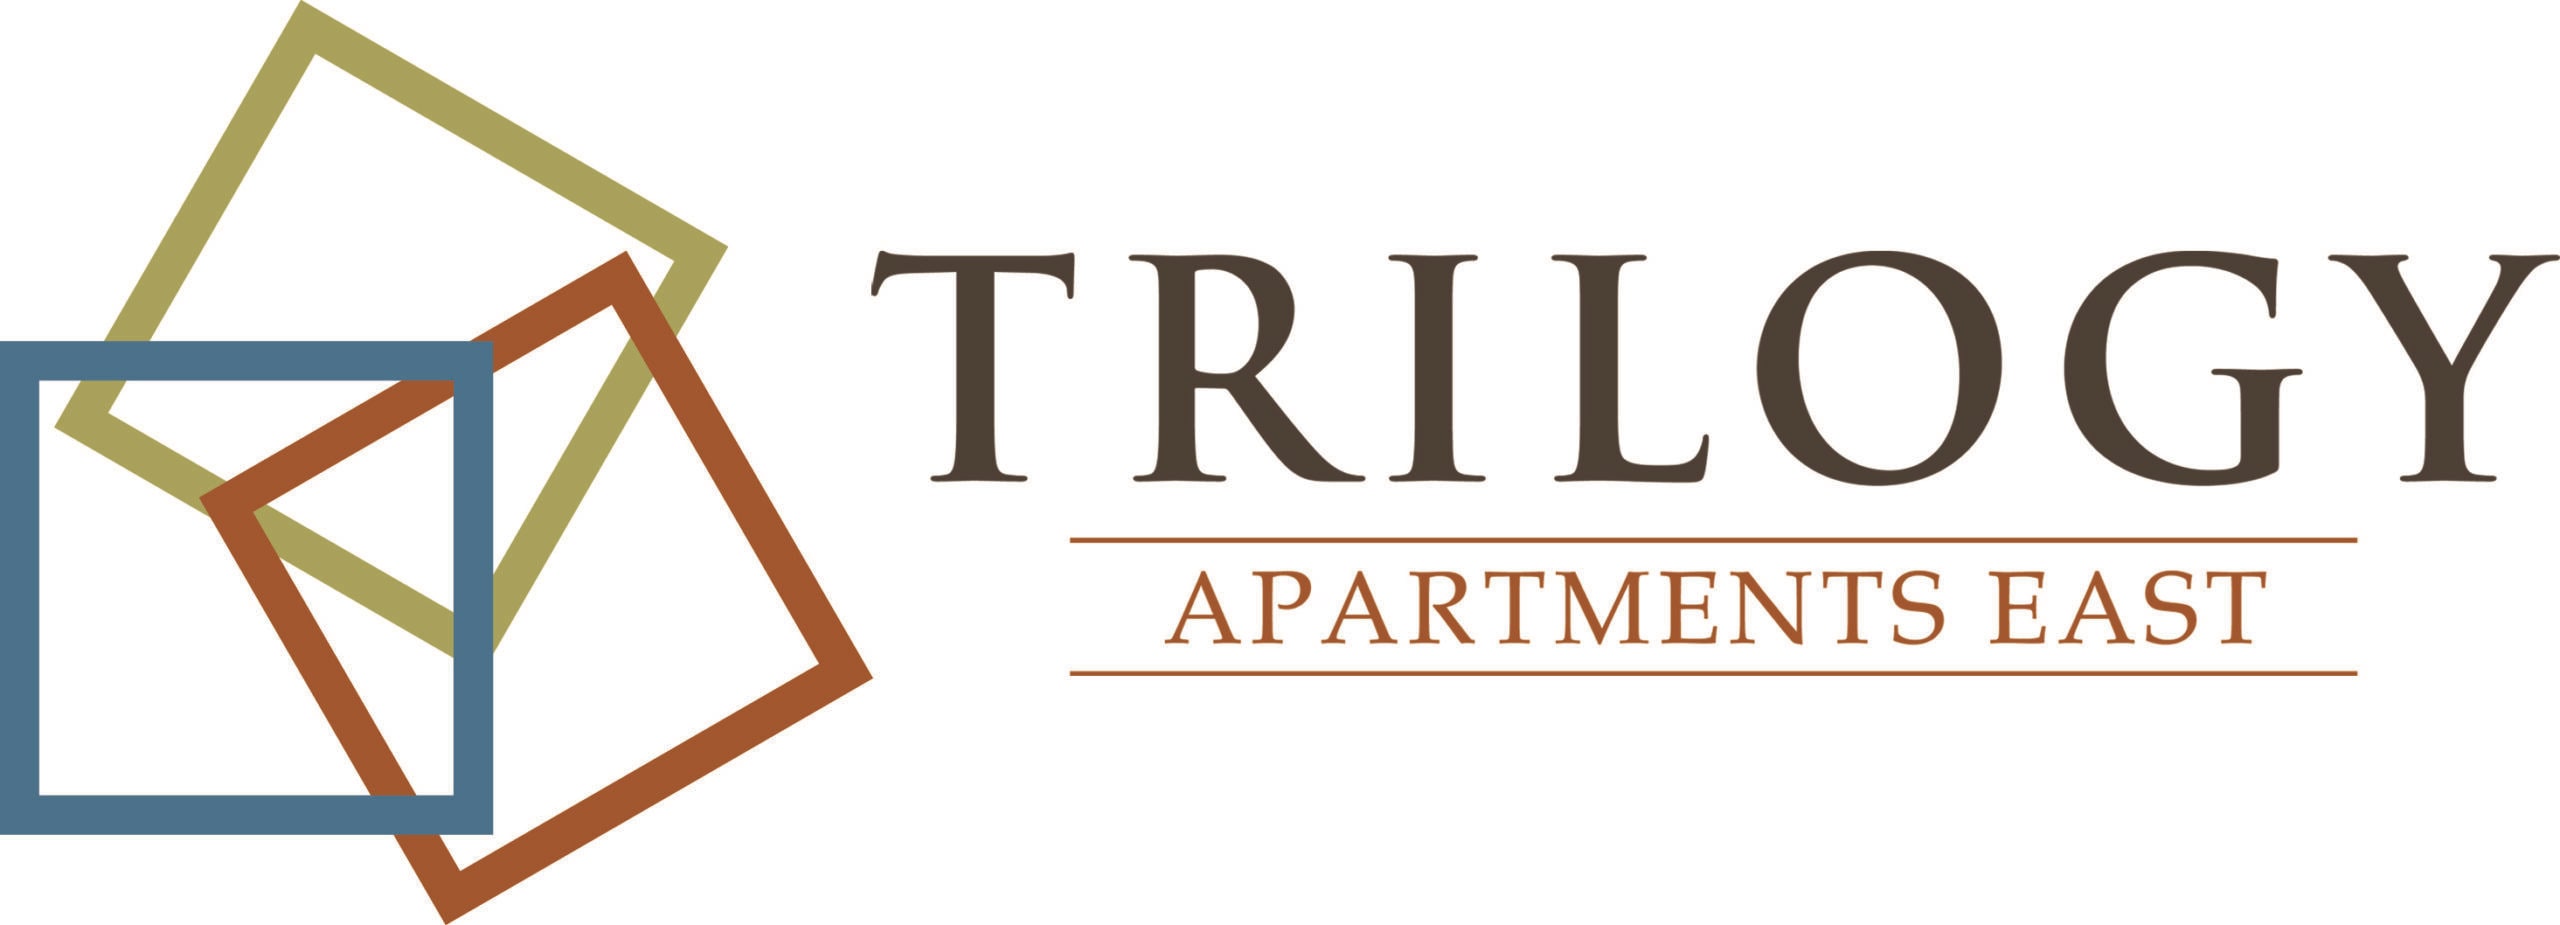 Trilogy East Apartments logo